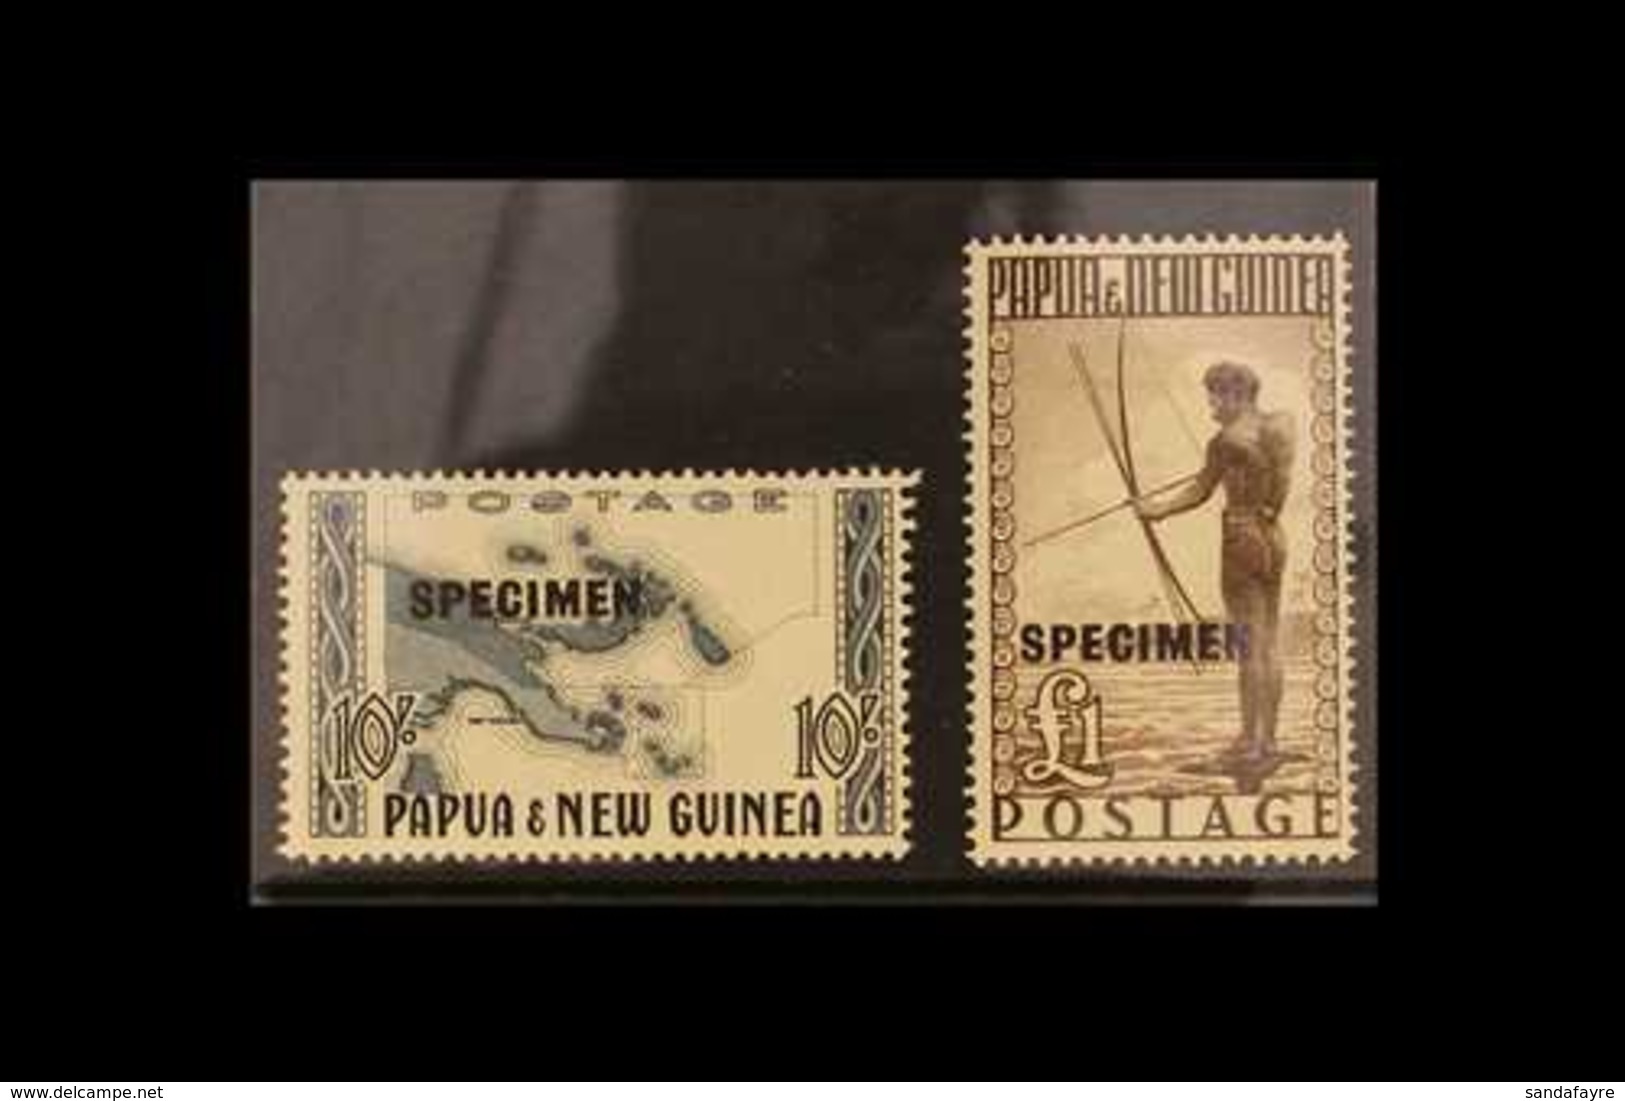 1952 10s Blue-black And £1 Deep Brown Overprinted "SPECIMEN", SG 14s/15s, For More Images, Please Visit Http://www.sanda - Papua-Neuguinea